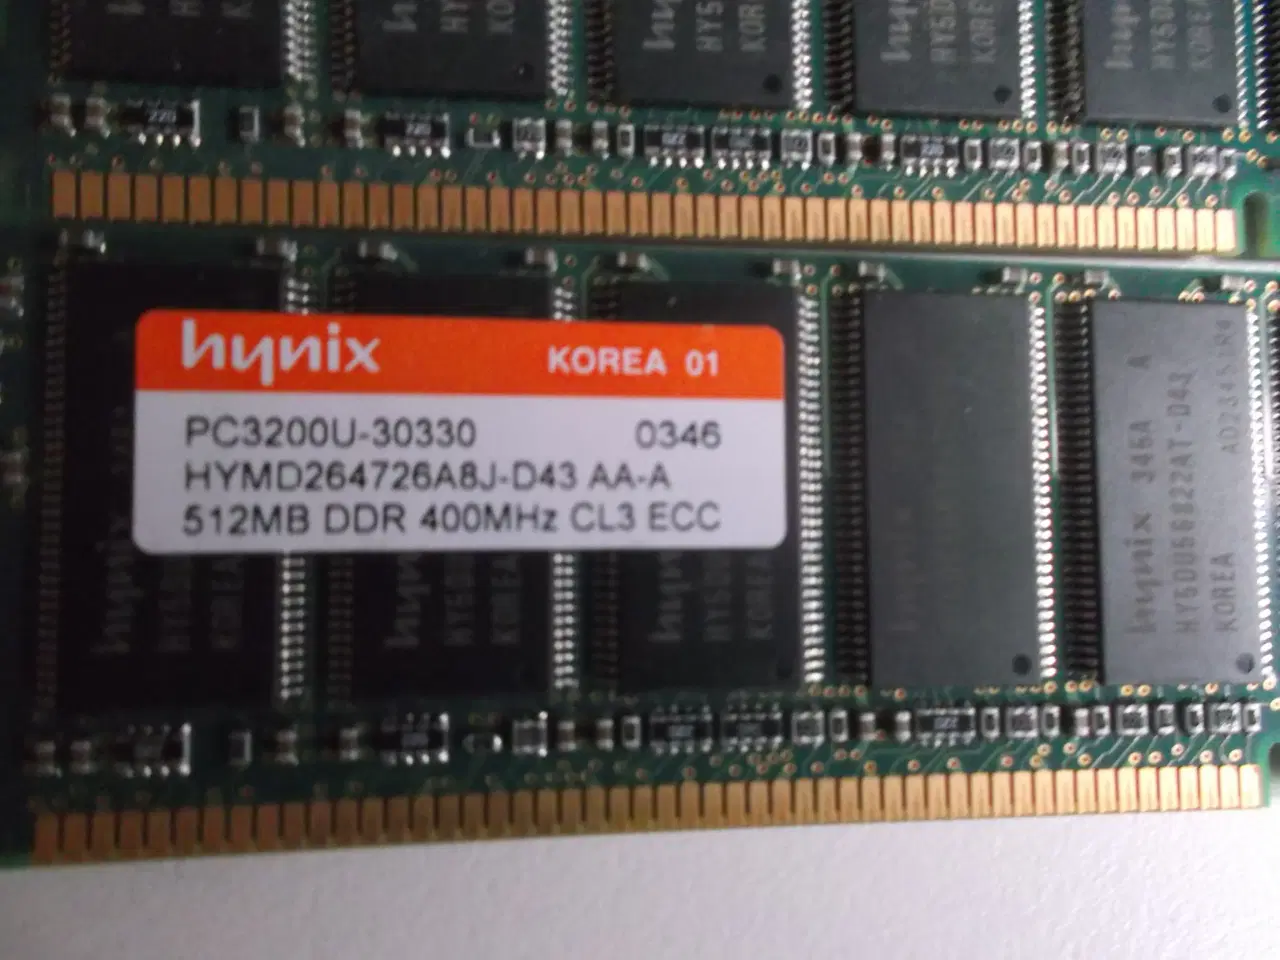 Billede 2 - hynix RAM 512MB PC3200U-30330 DDR 400MHz CL3 ECC